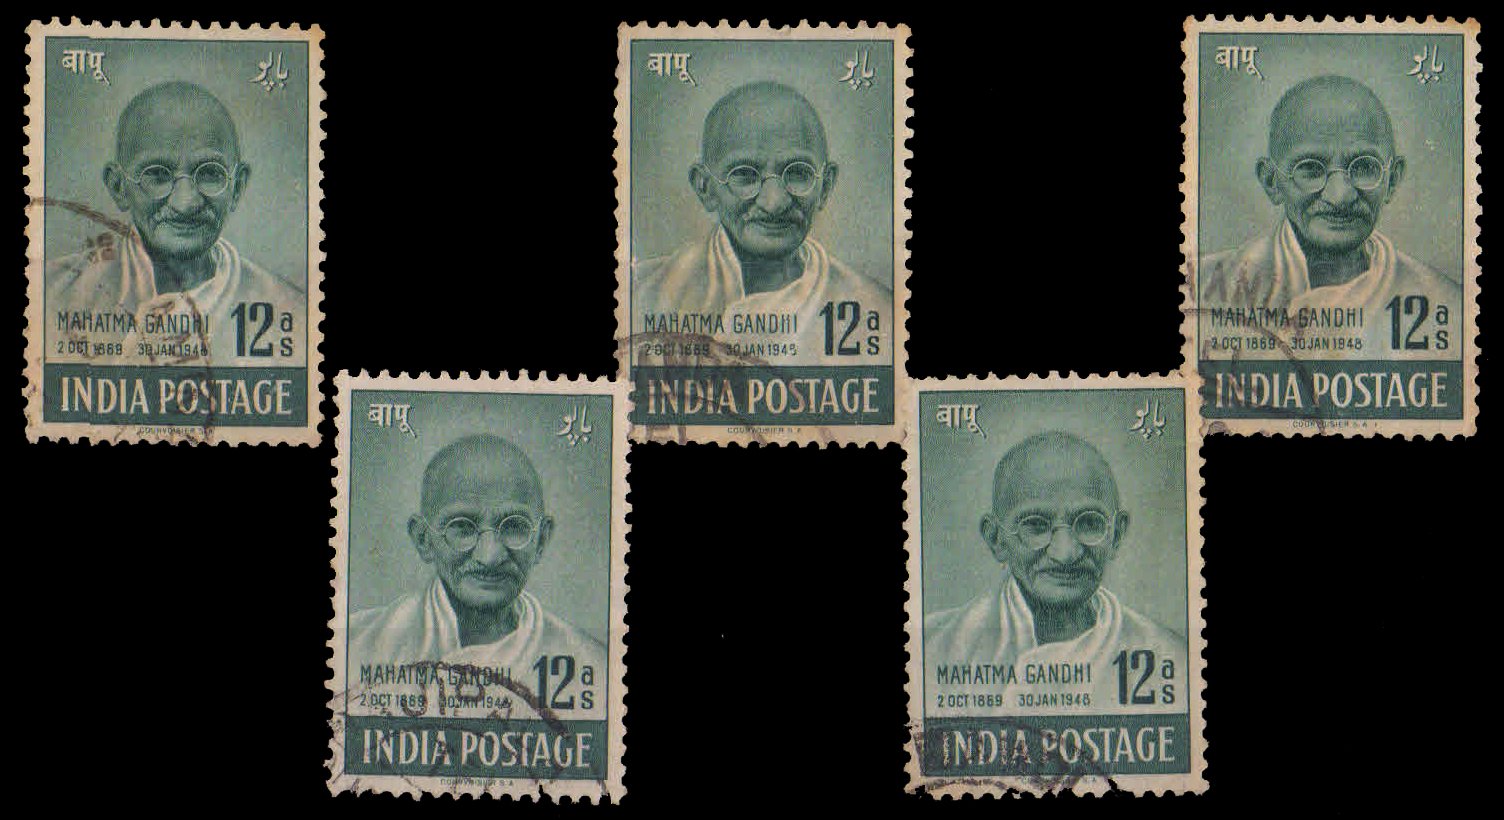 INDIA 1948-Mahatma Gandhi 12 As, Used 5 Copies, Mahatma Gandhi Mourning Issue